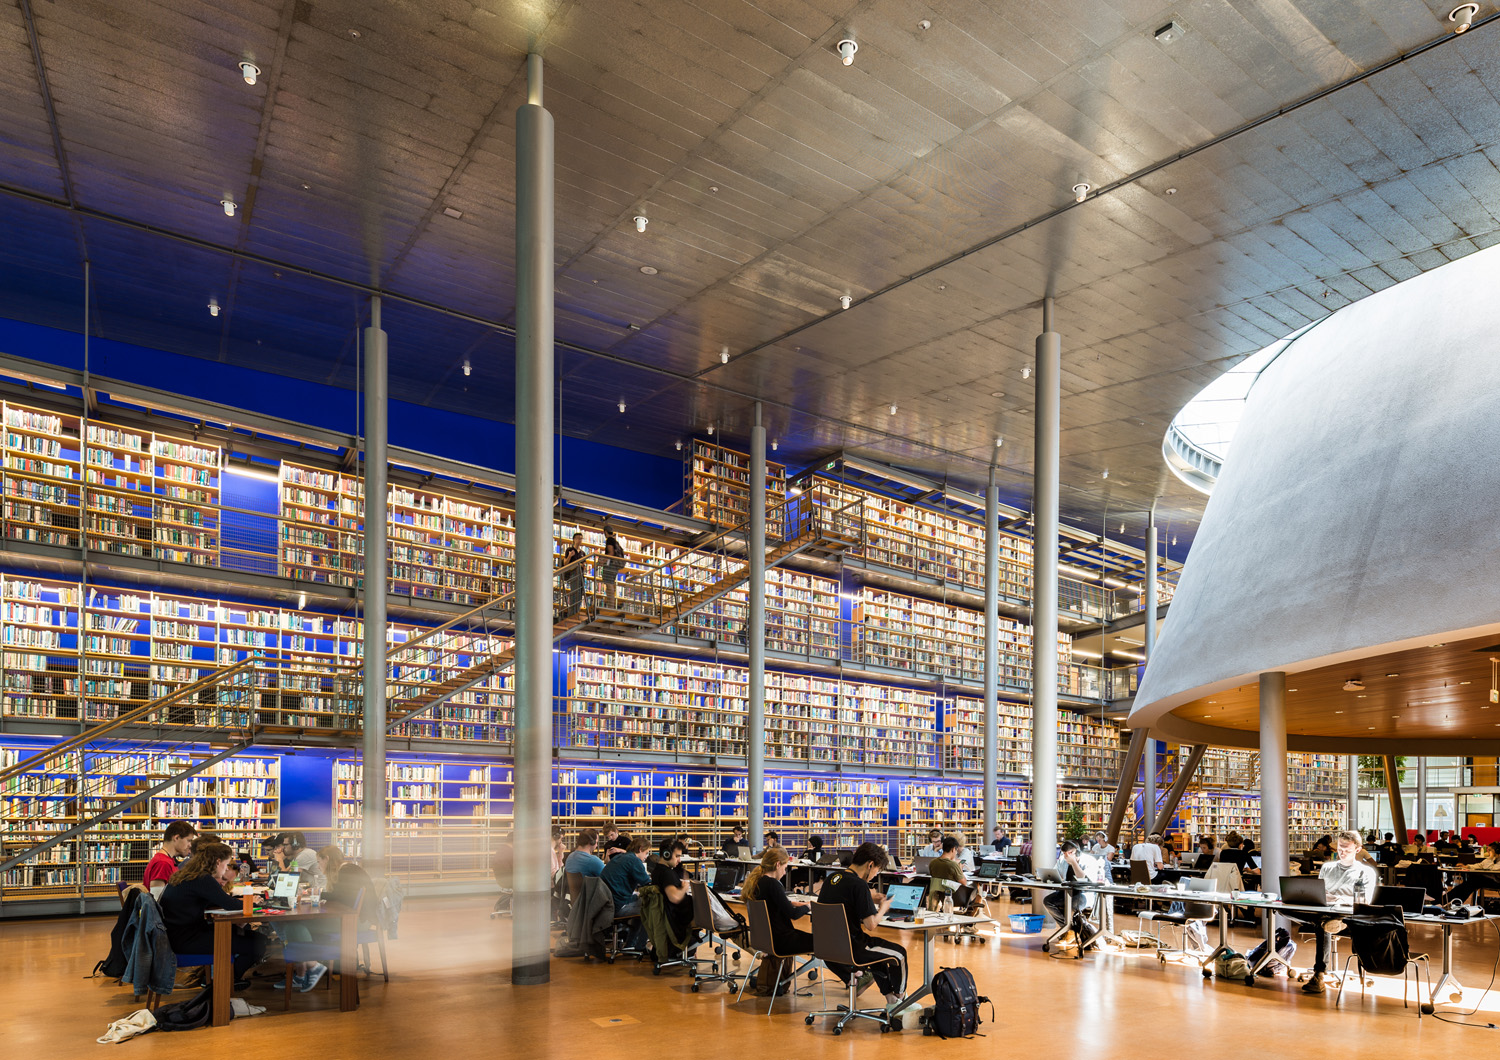 Library Delft University of Technology